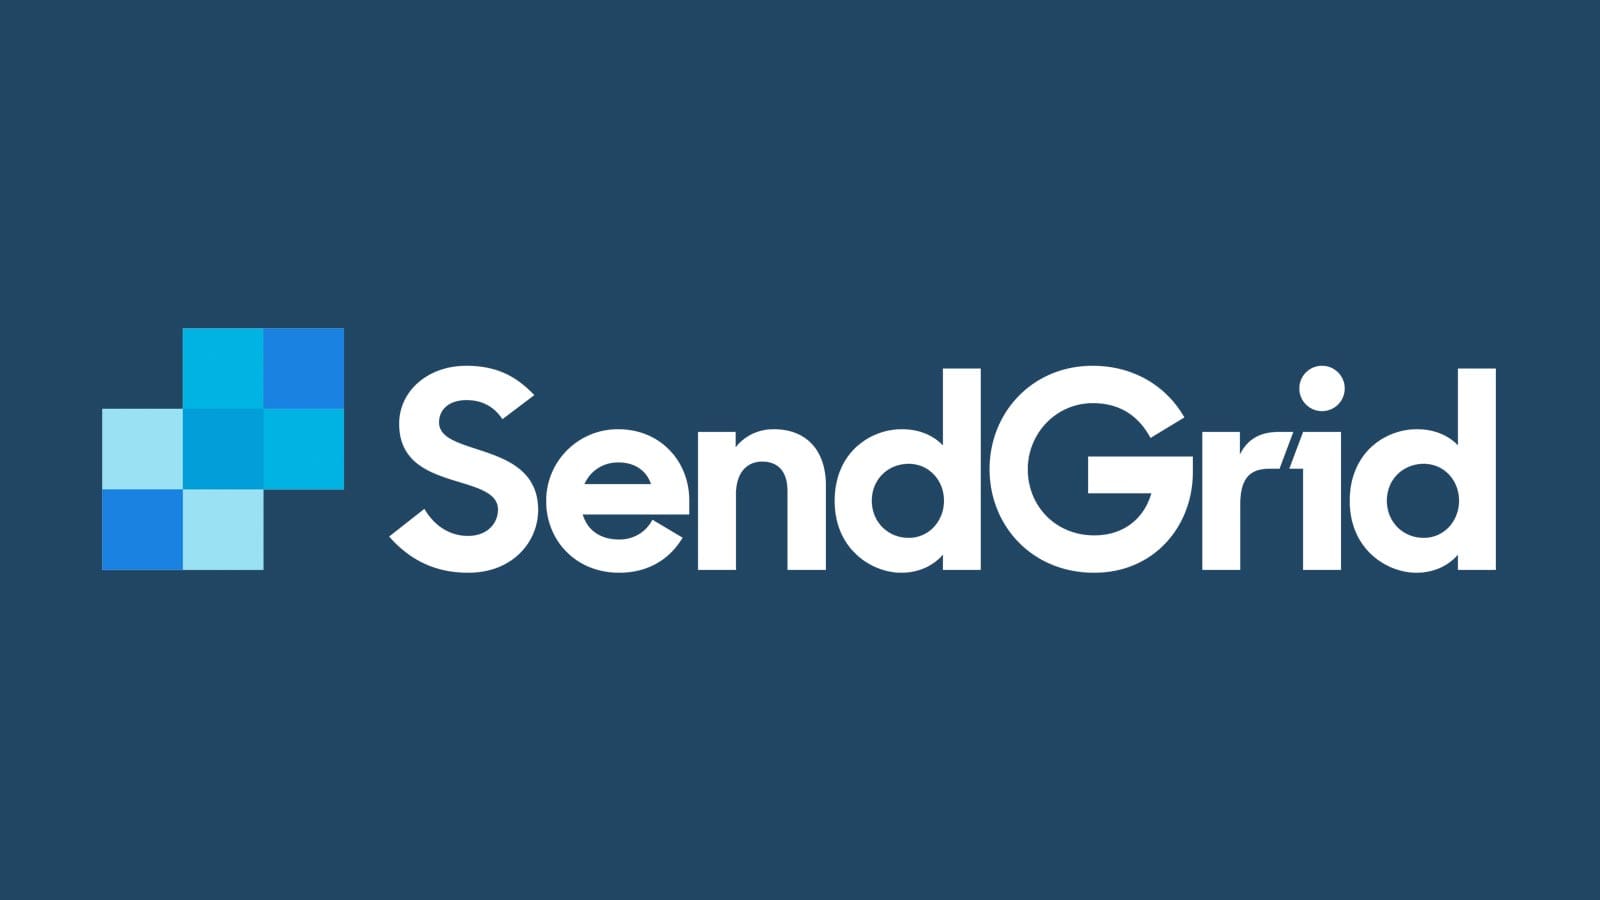 Úvod do email marketingu, emaily vo WordPresse a nastavenie Sendgridu